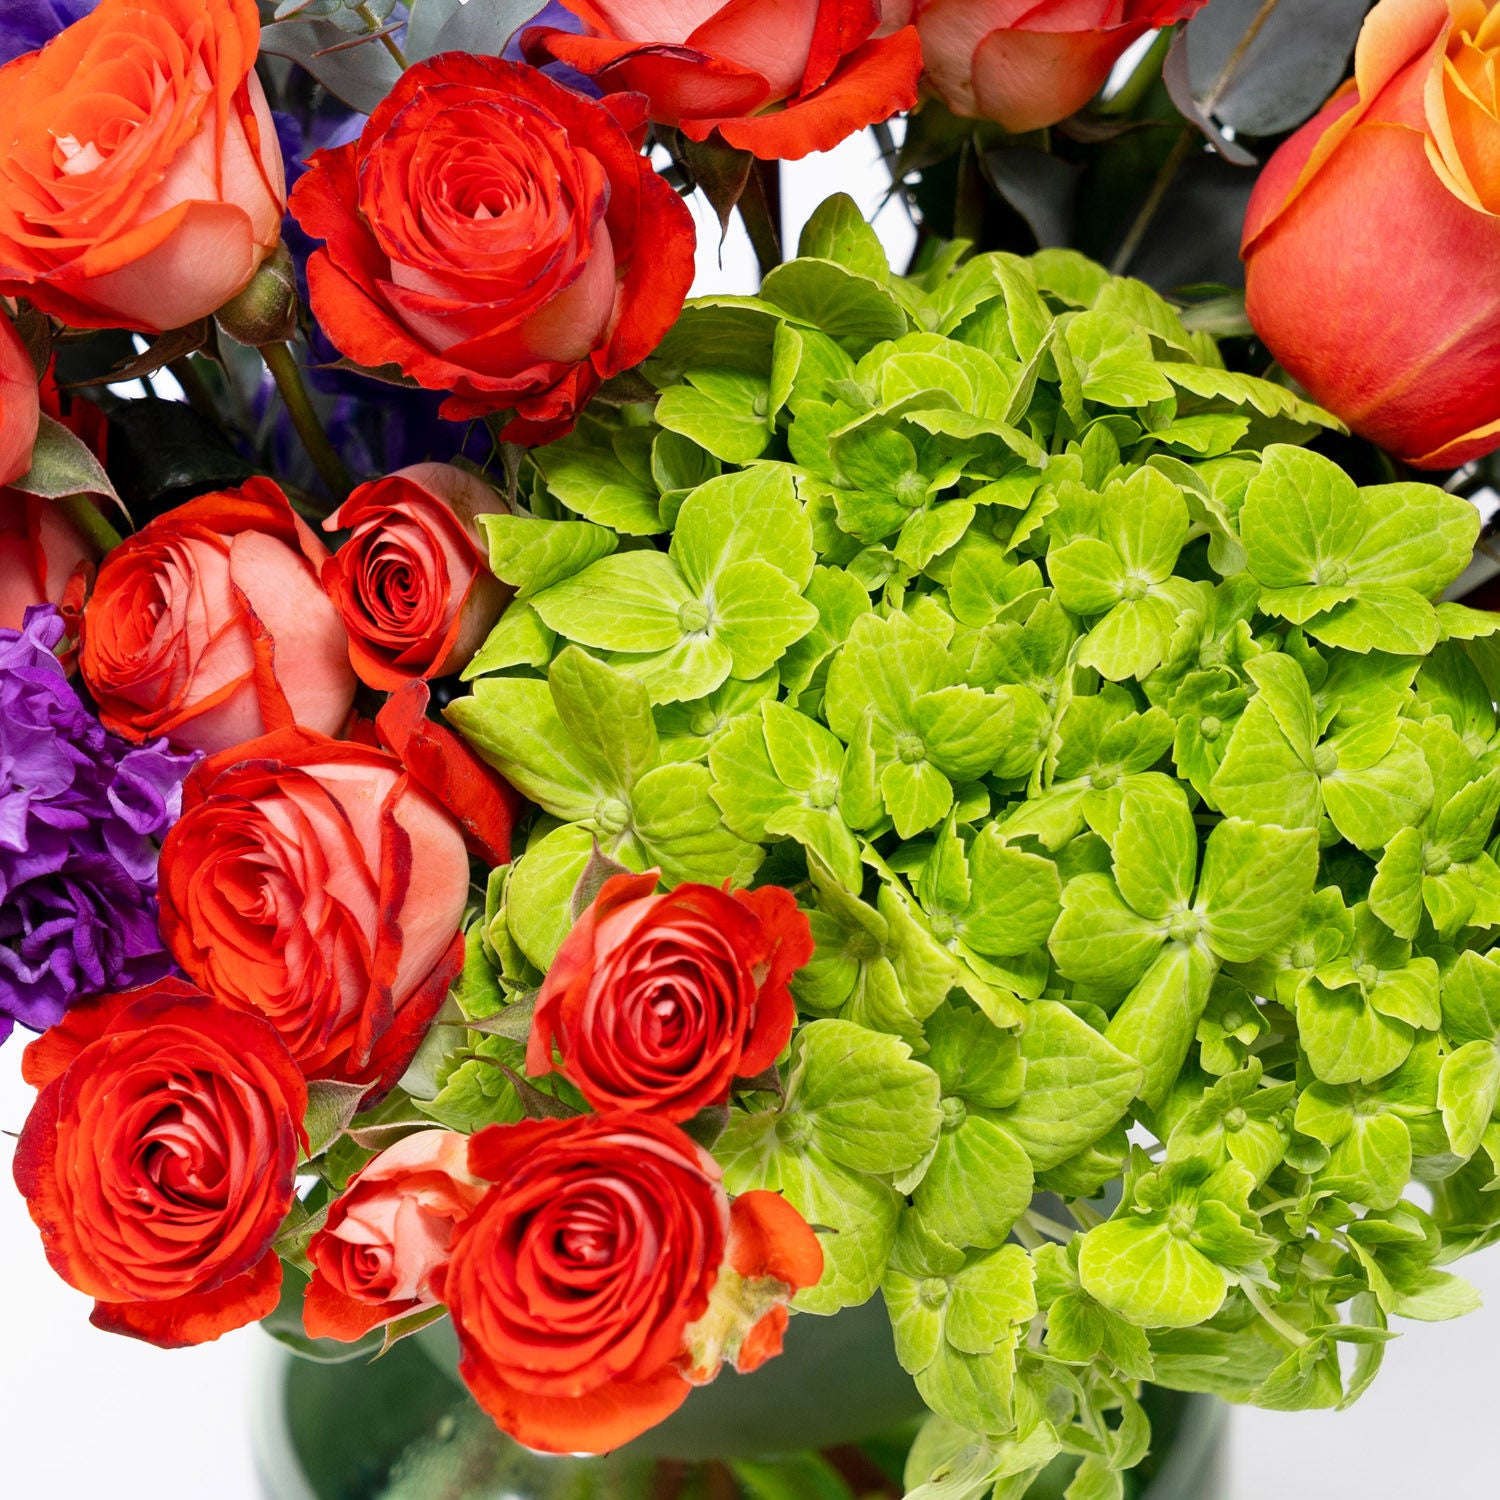 Mix Flowers Arrangement in Glass Vase